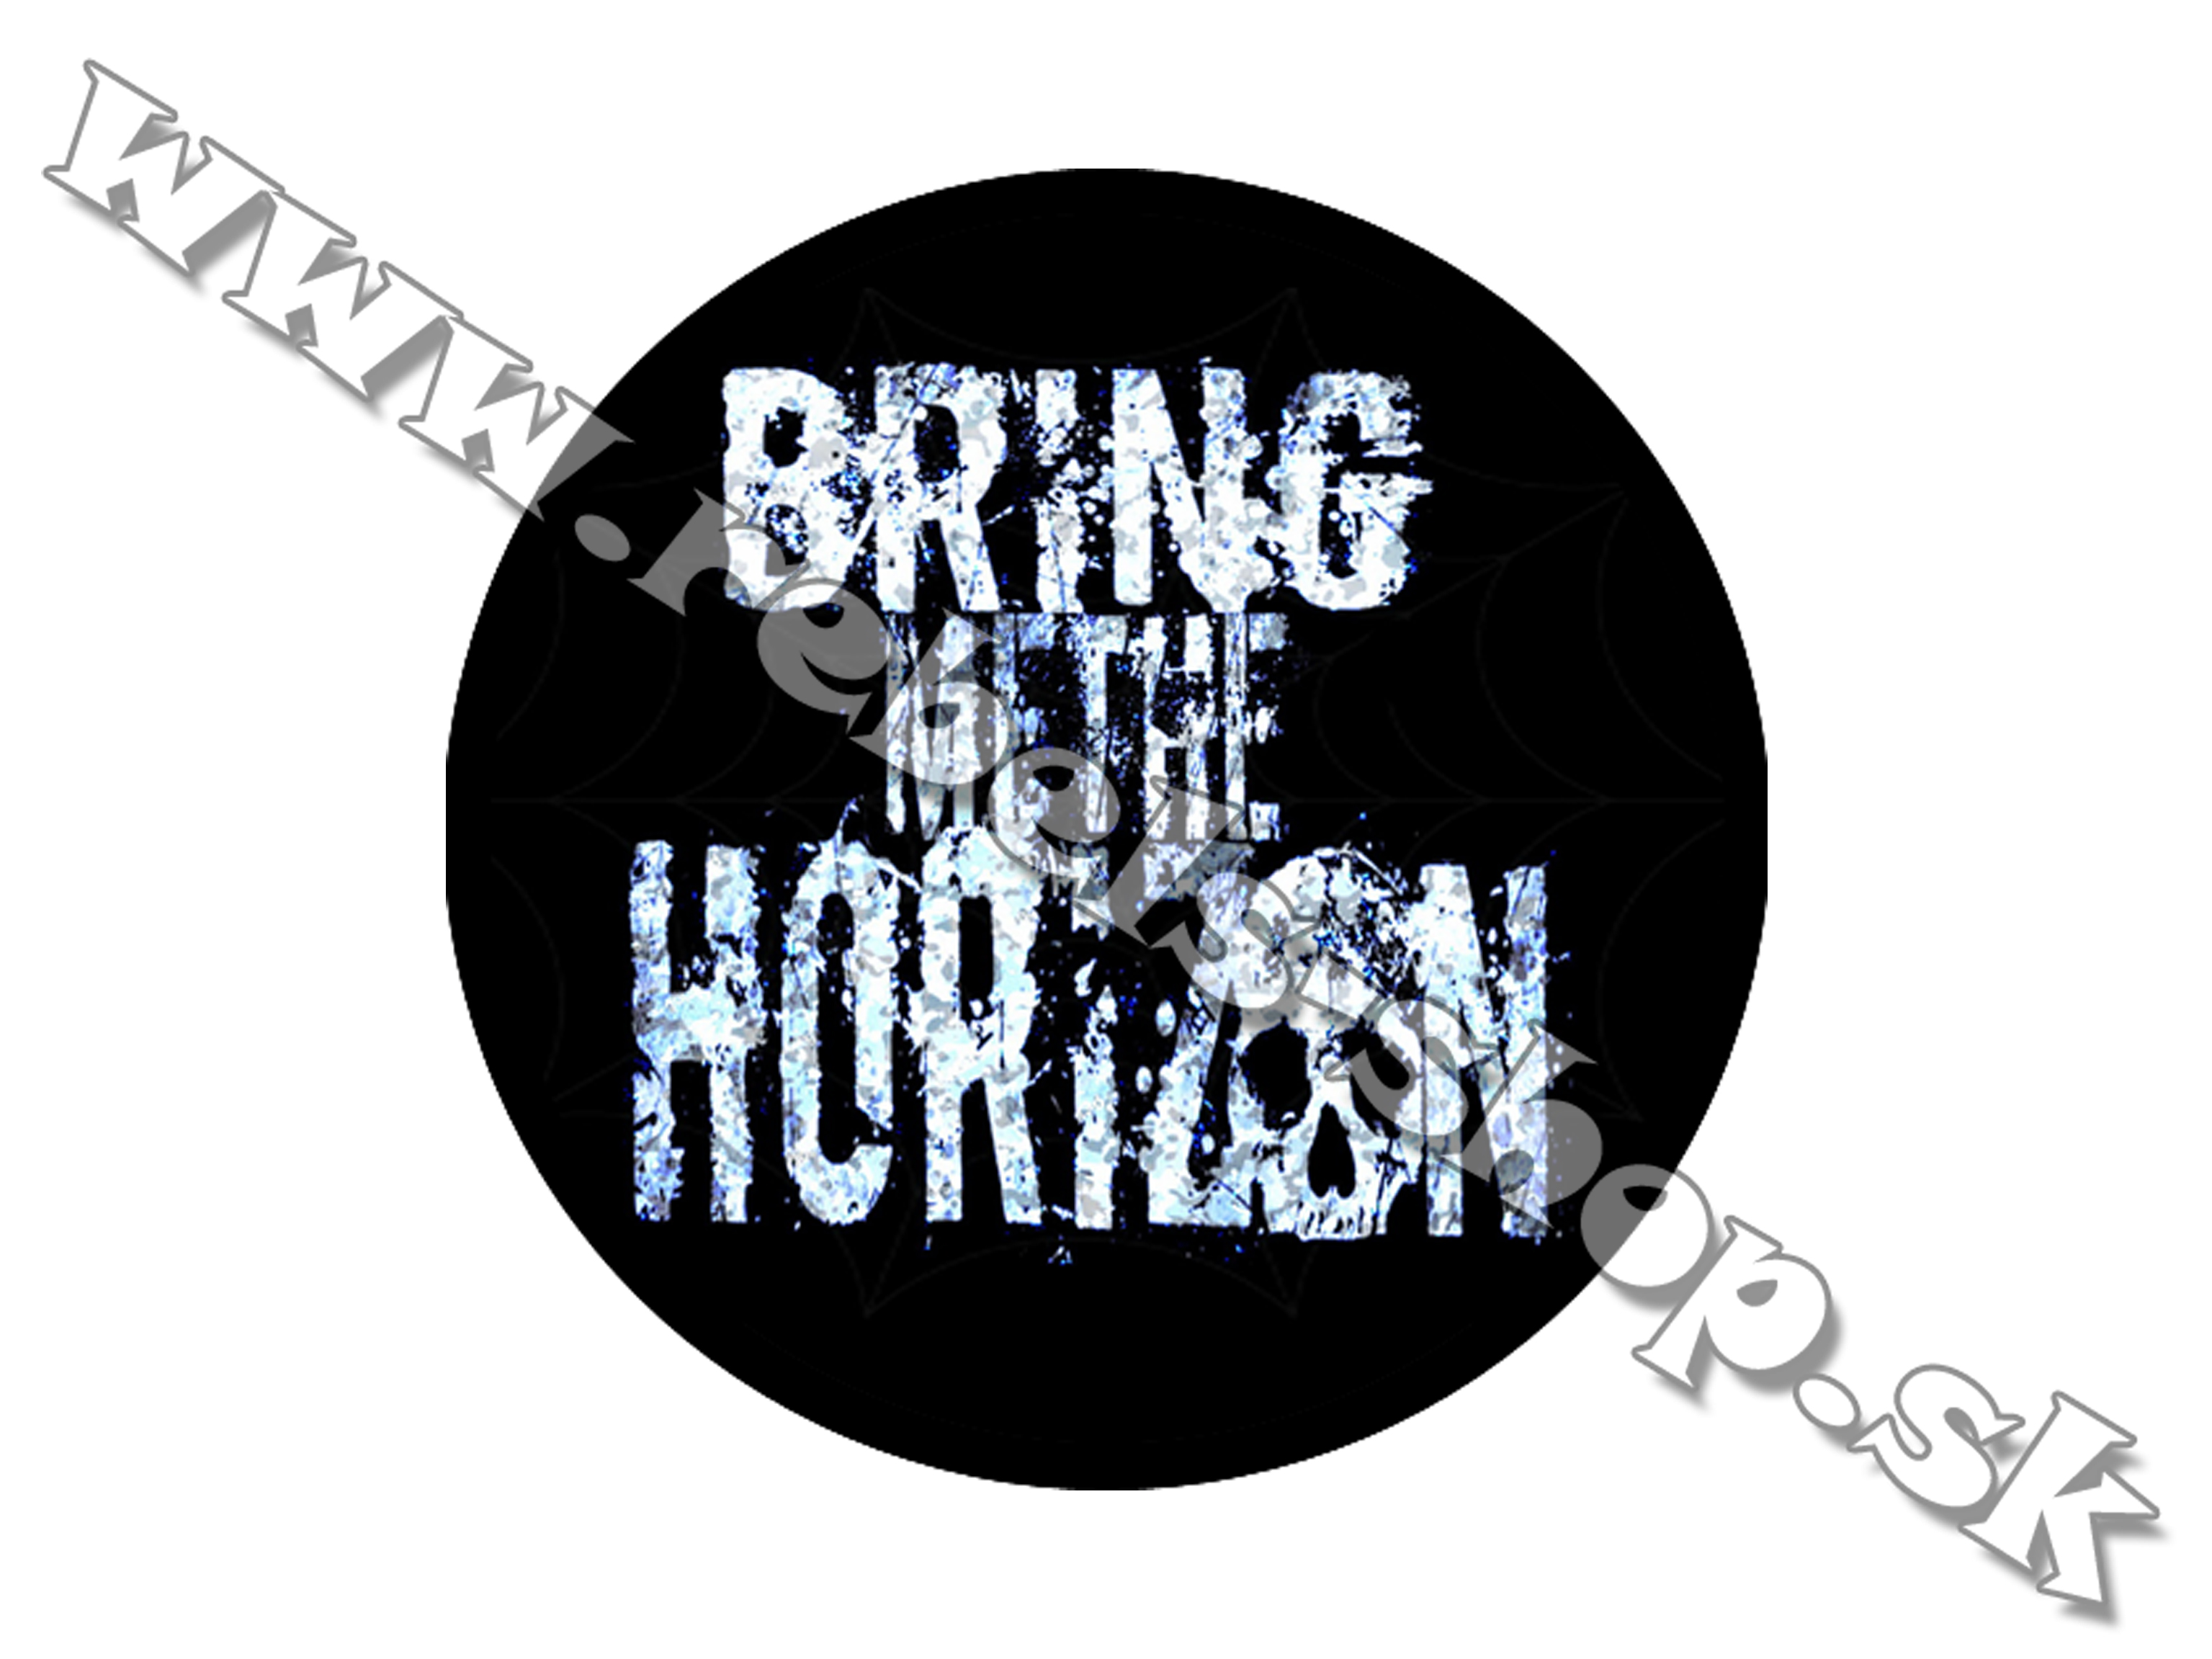 Odznak "Bring Me The Horizon"